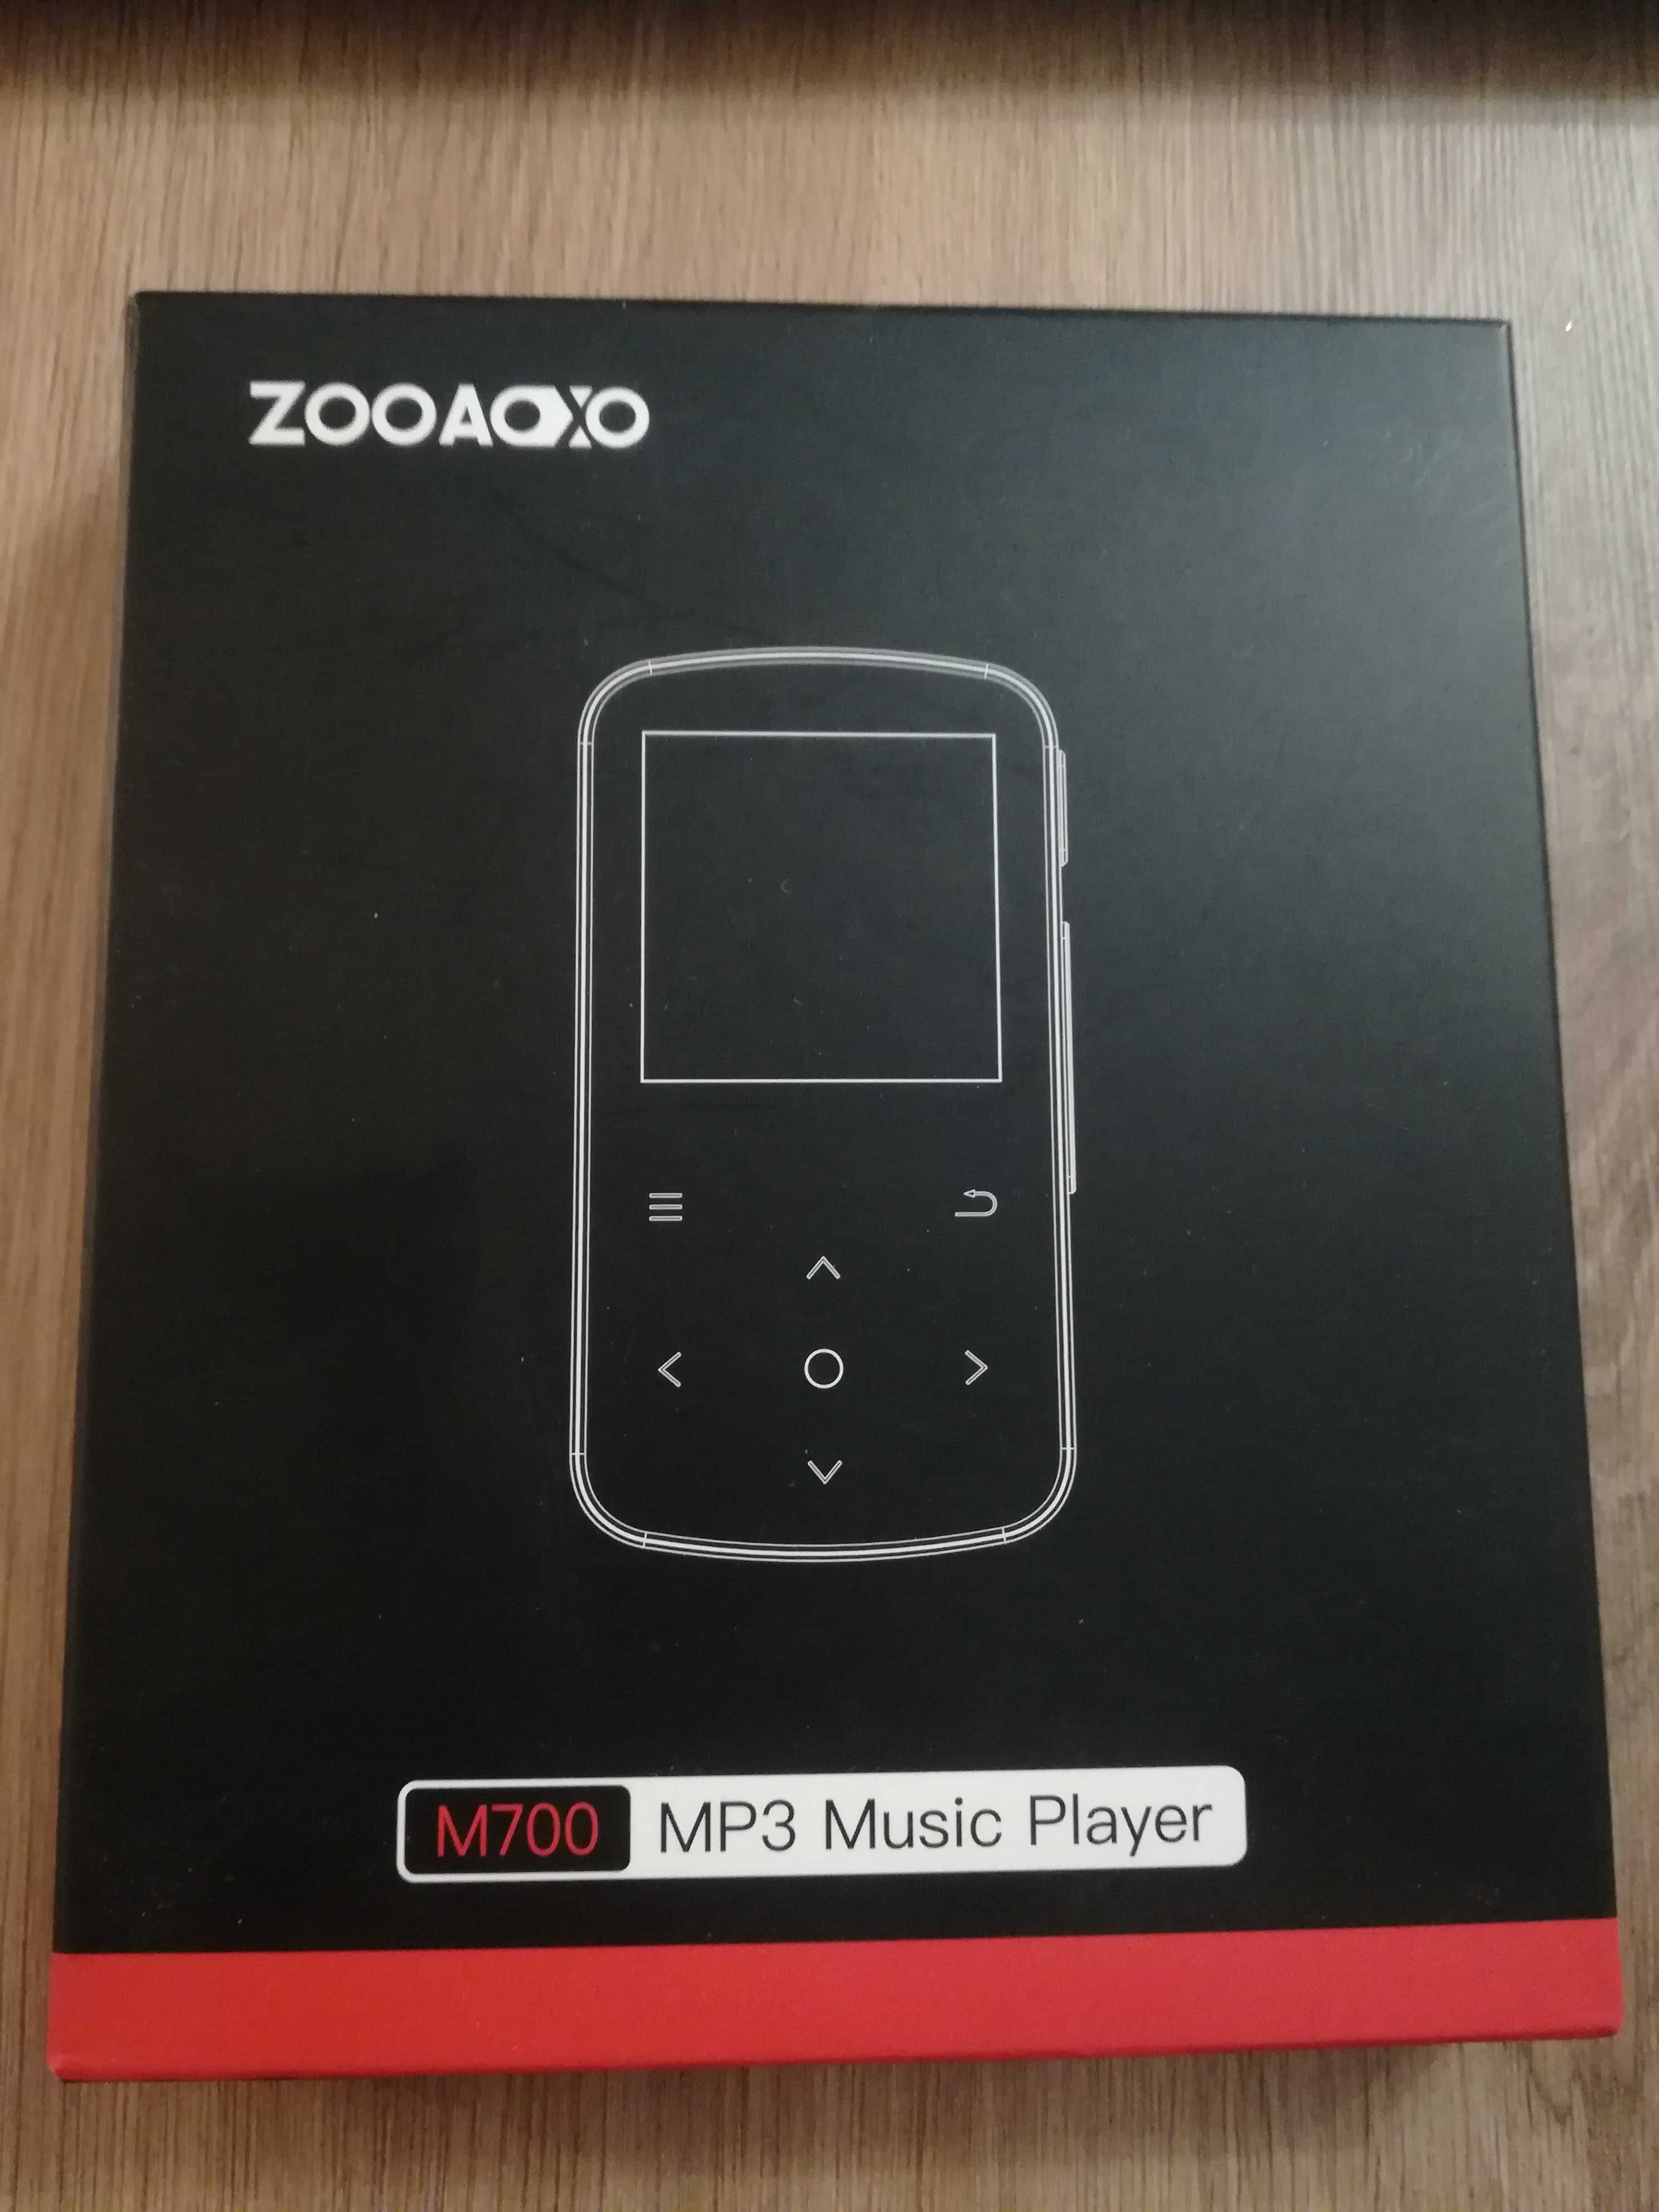 Odtwarzacz MP3 zooaoxo